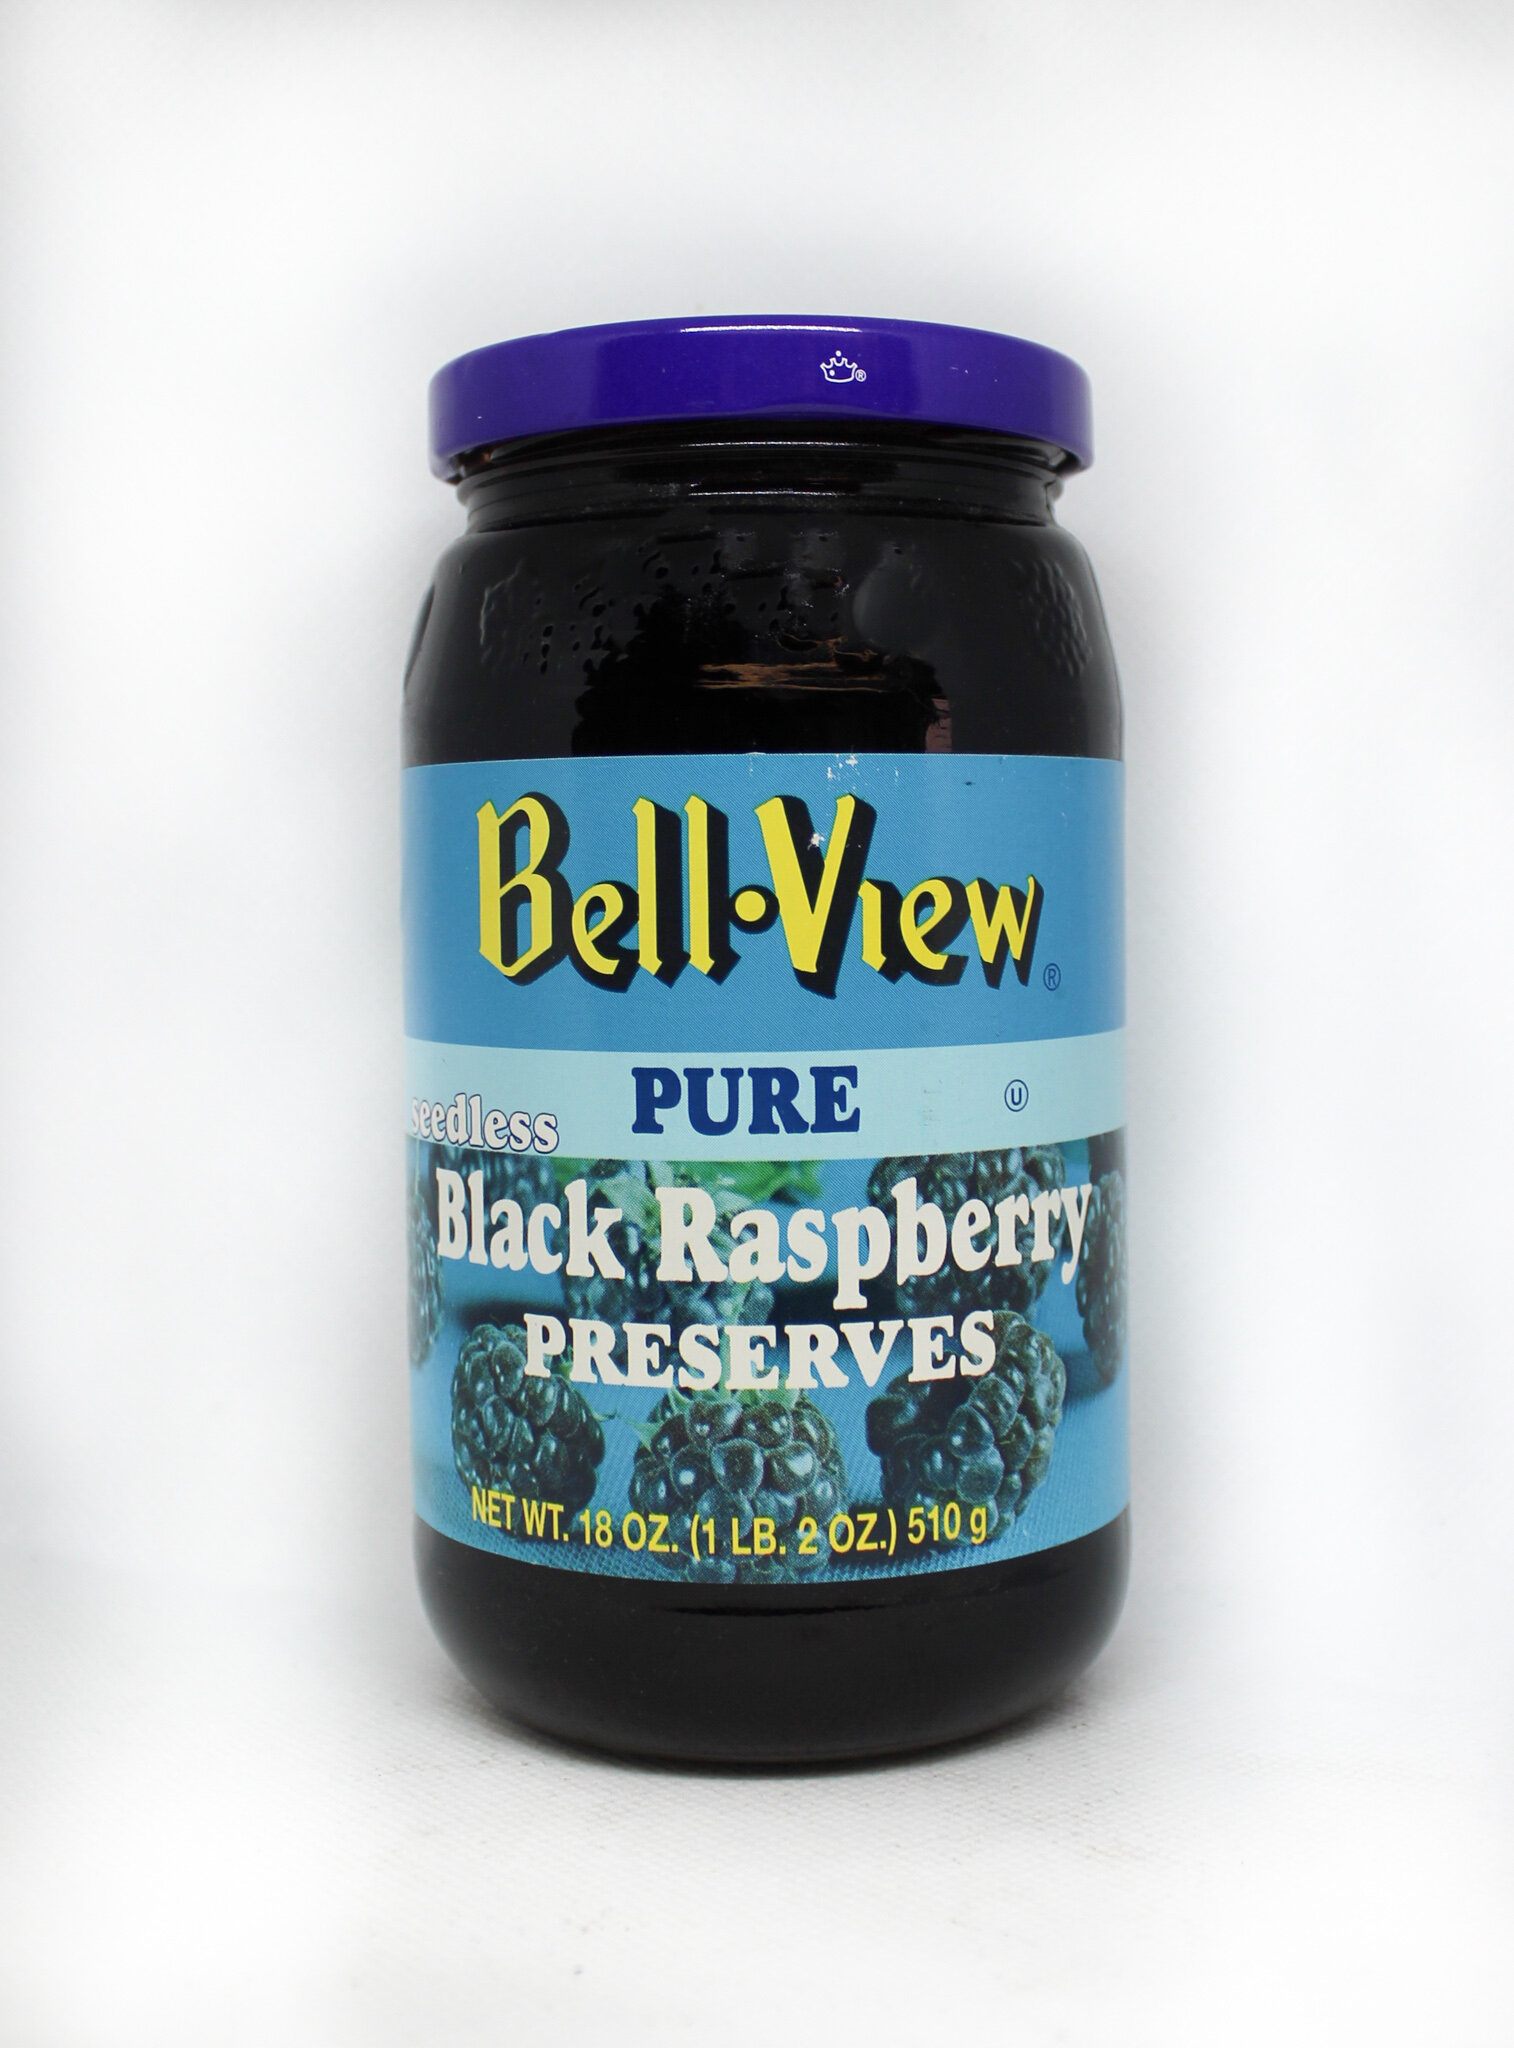 Black Raspberry Preserves jar. 